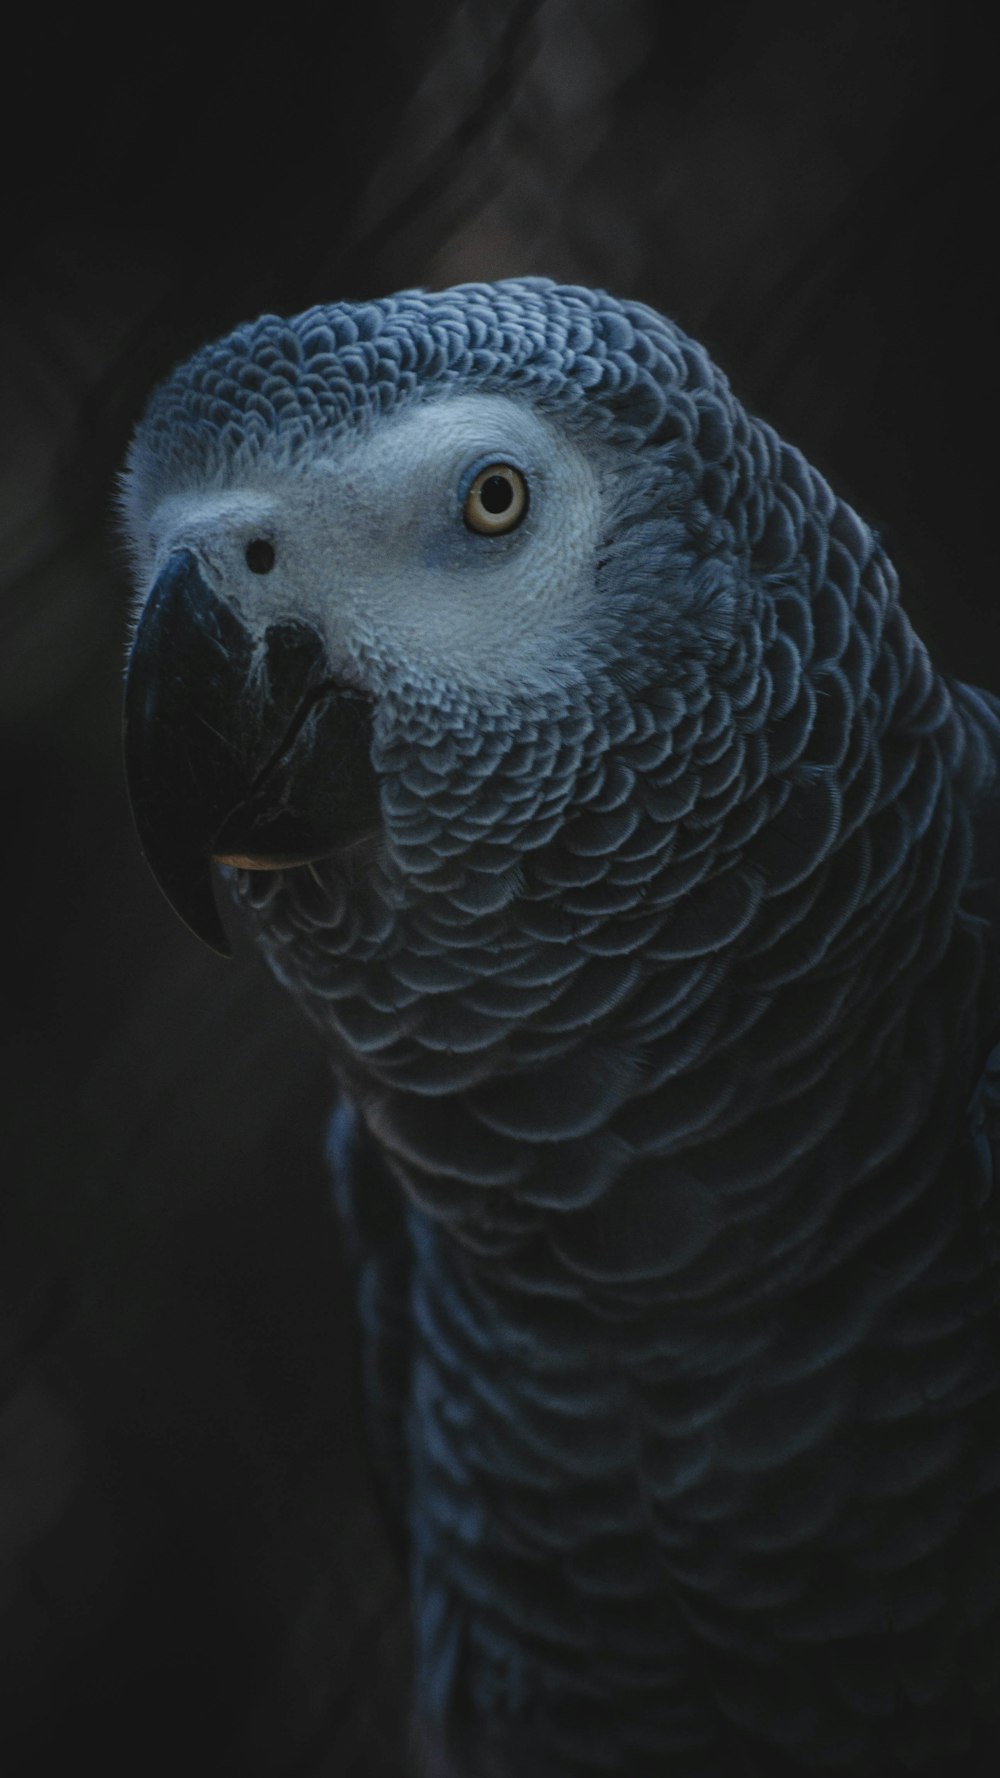 a close up of a bird